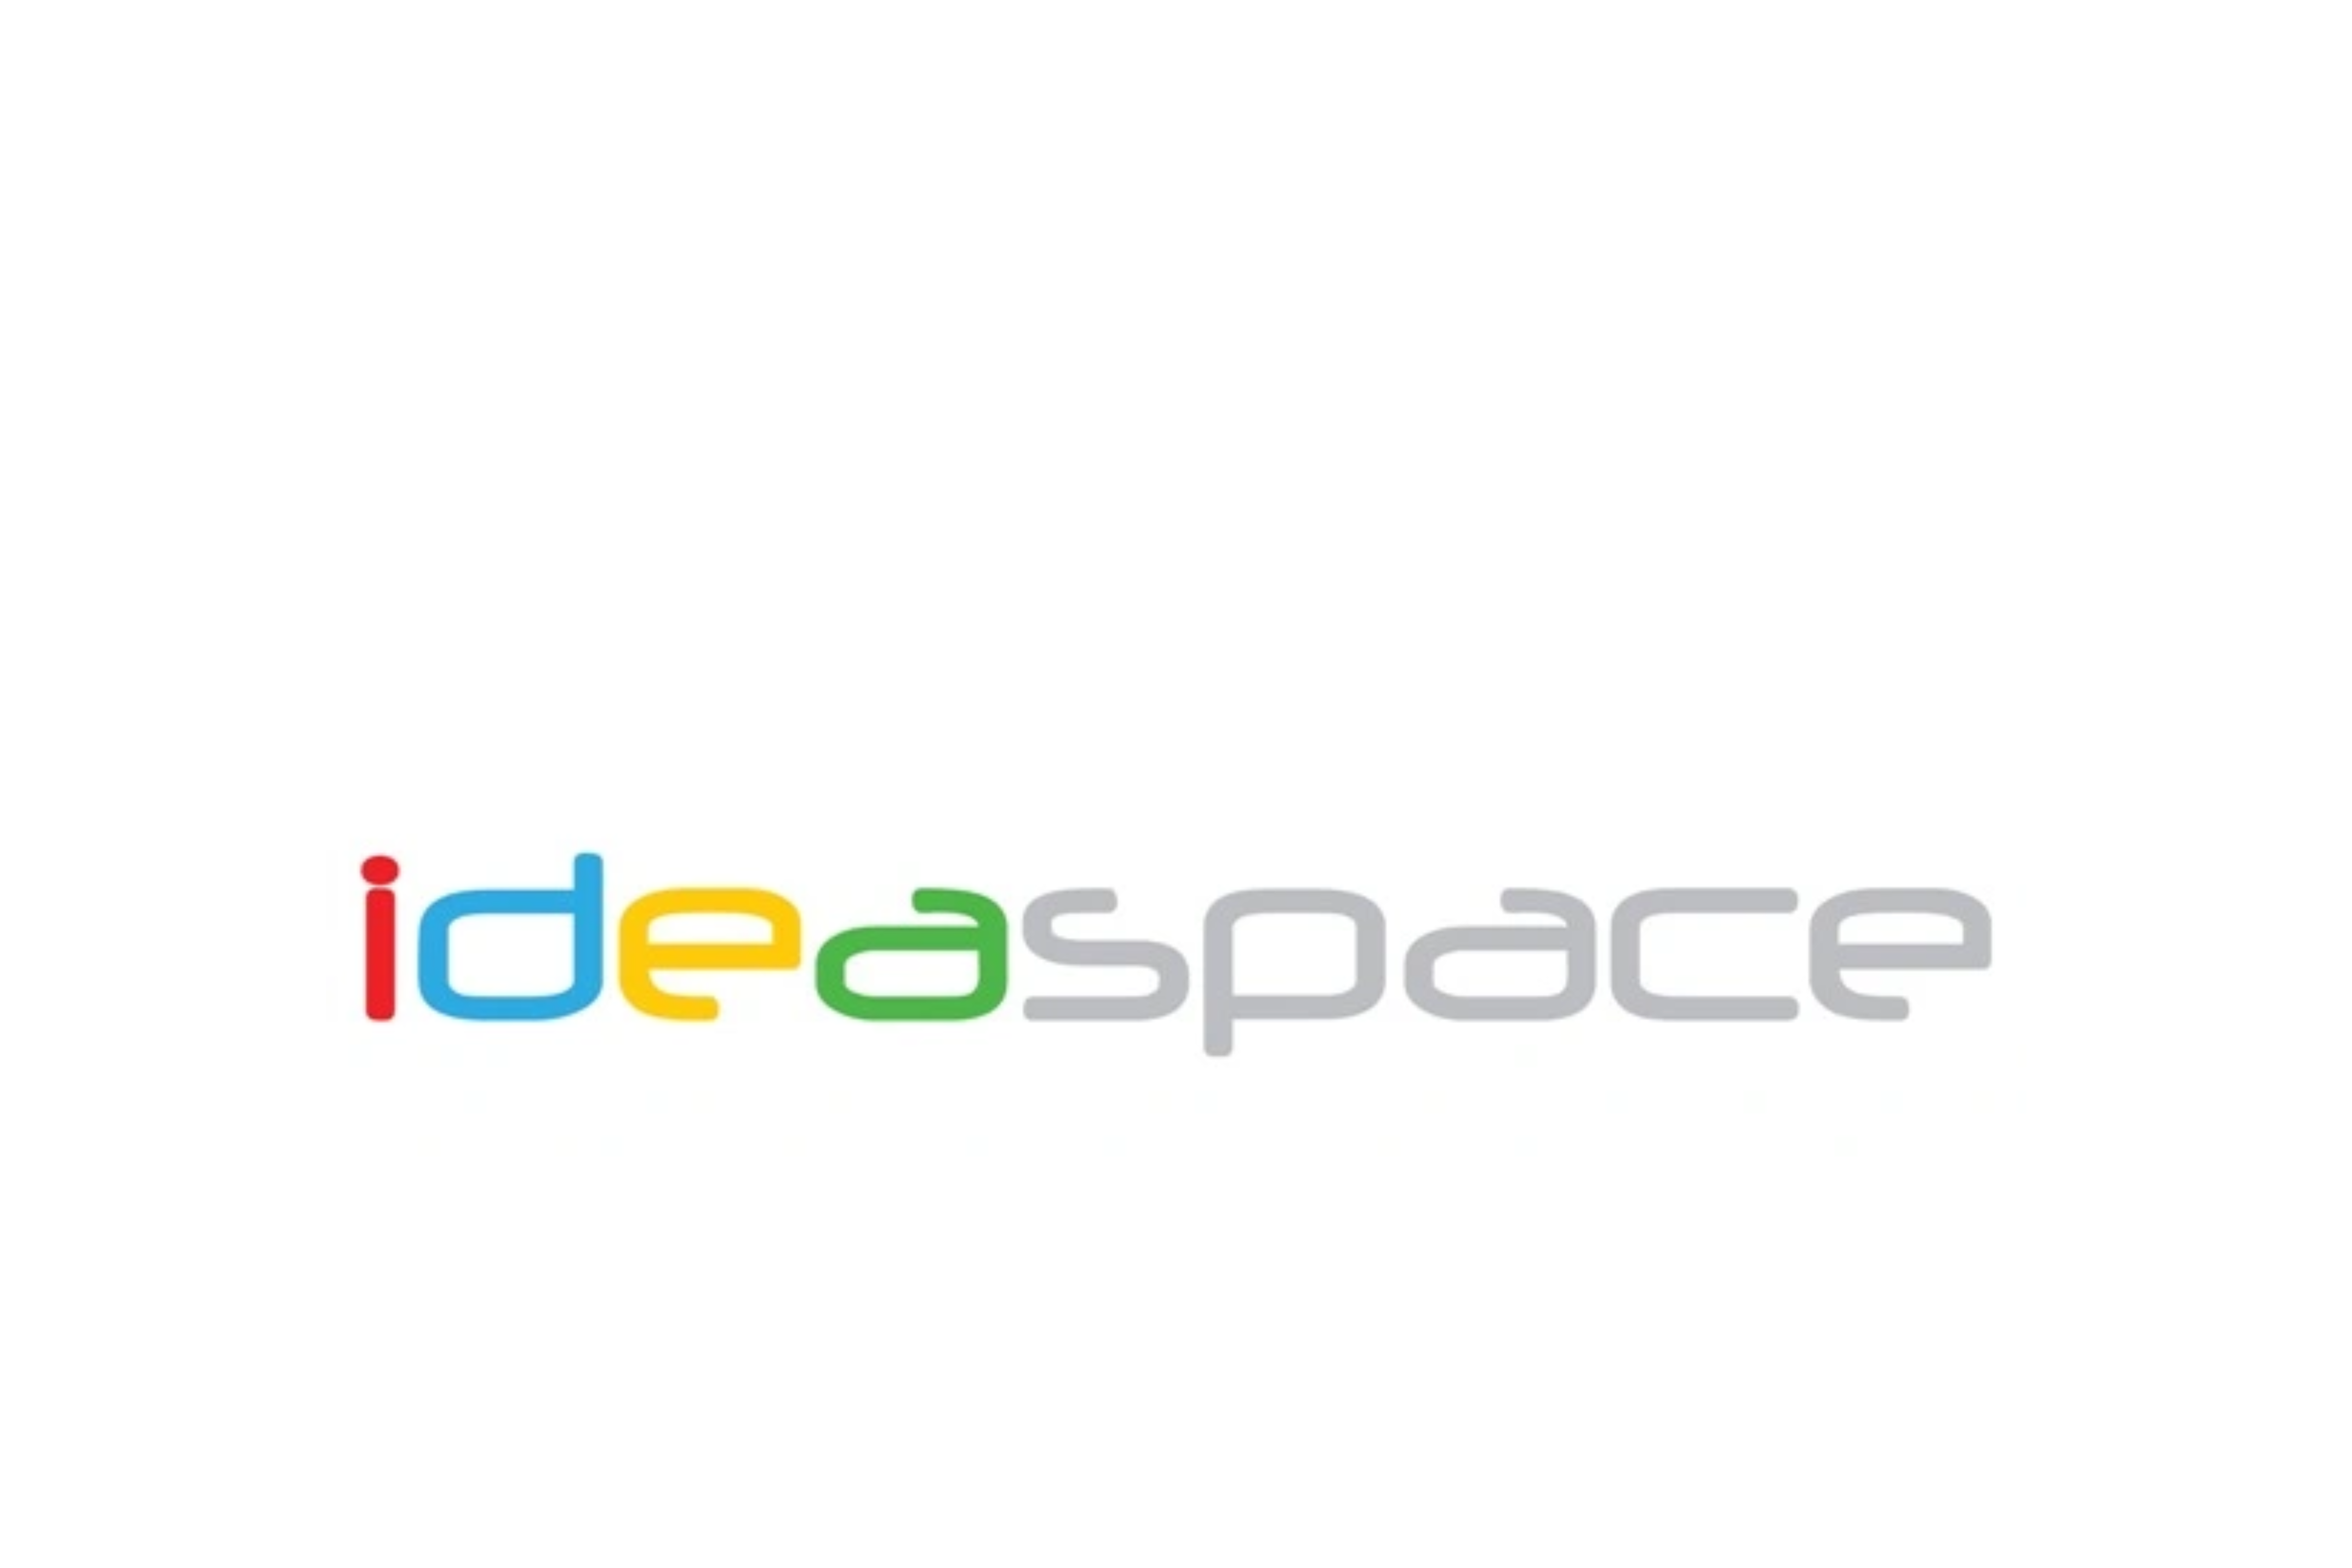 ideaspace